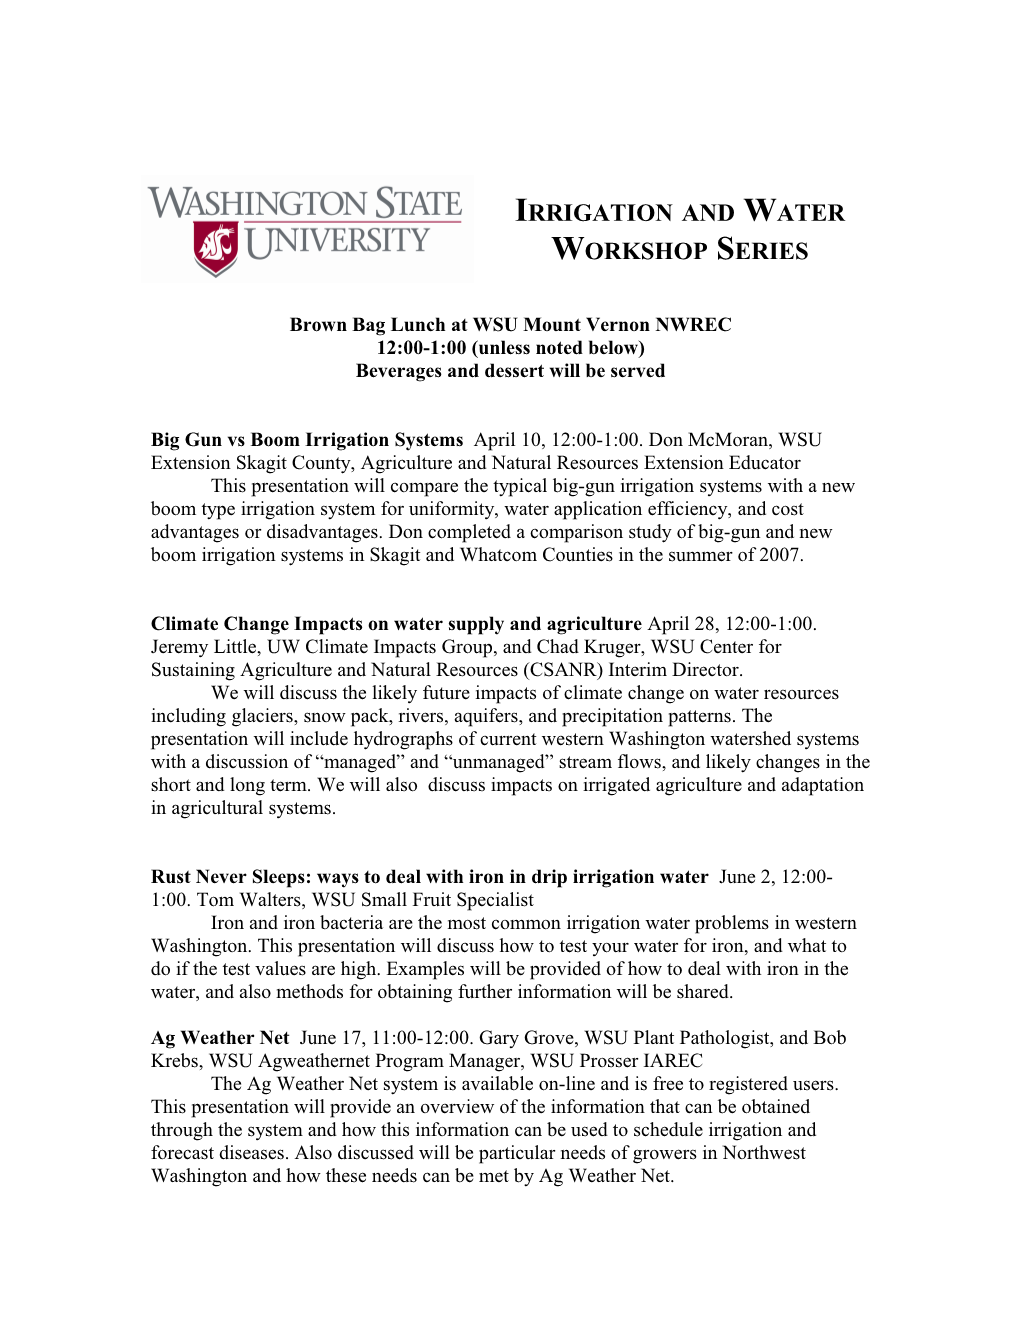 Irrigation and Water Workshop Series